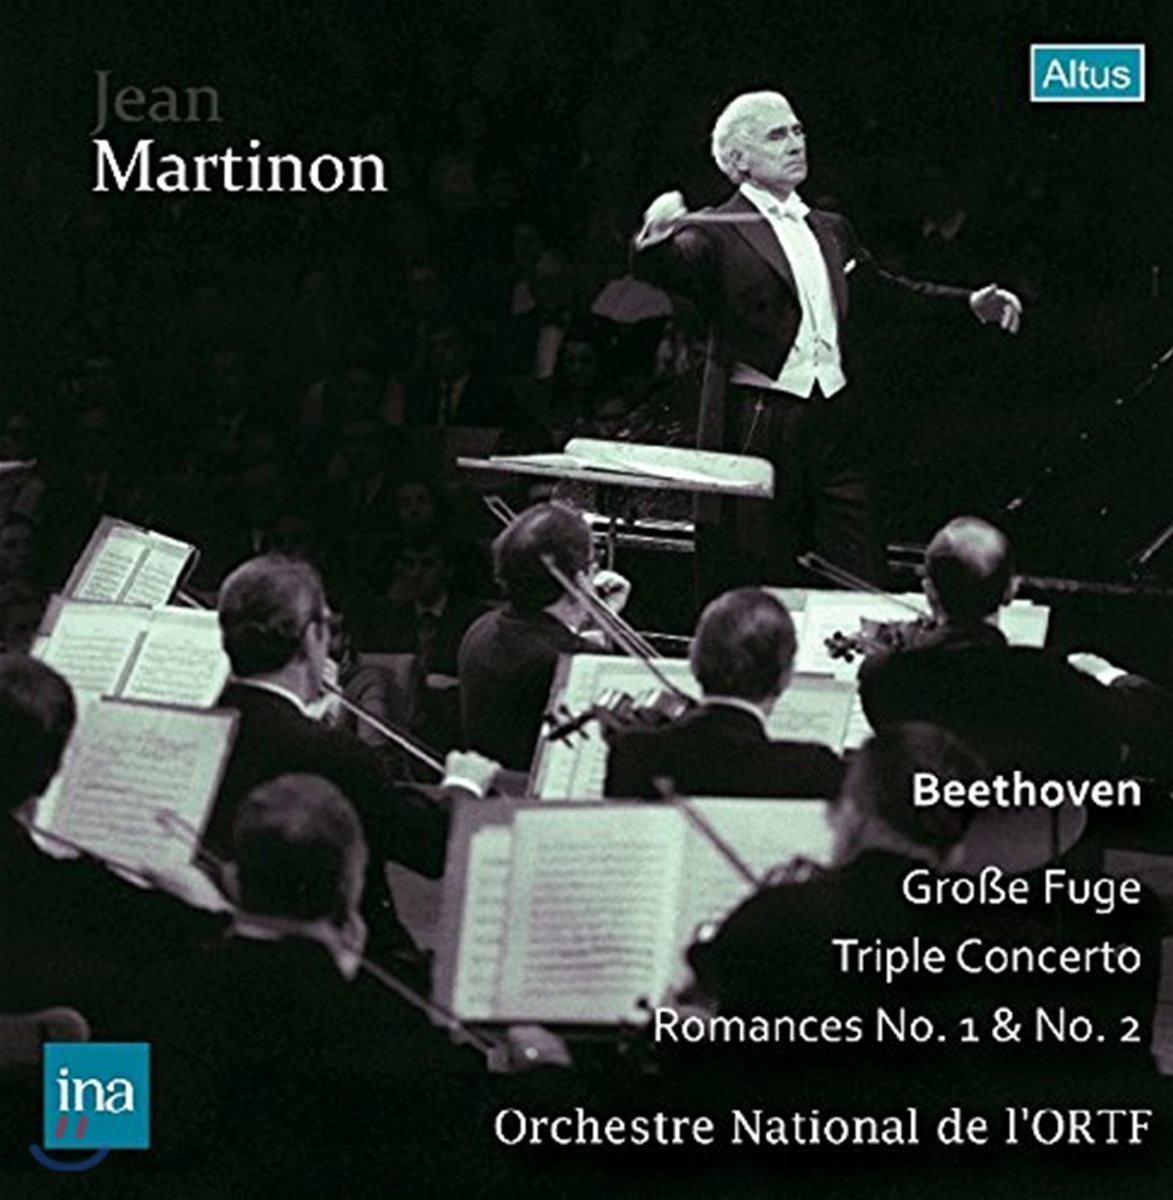 Jean Martinon 베토벤: 대푸가, 삼중 협주곡, 로망스 1, 2번 - 크리스티앙 페라스, 폴 토르틀리에, 장 마르티농, 프랑스 국립 방송 관현악단 (Beethoven: Grosse Fuge, Triple Concerto, Romances)